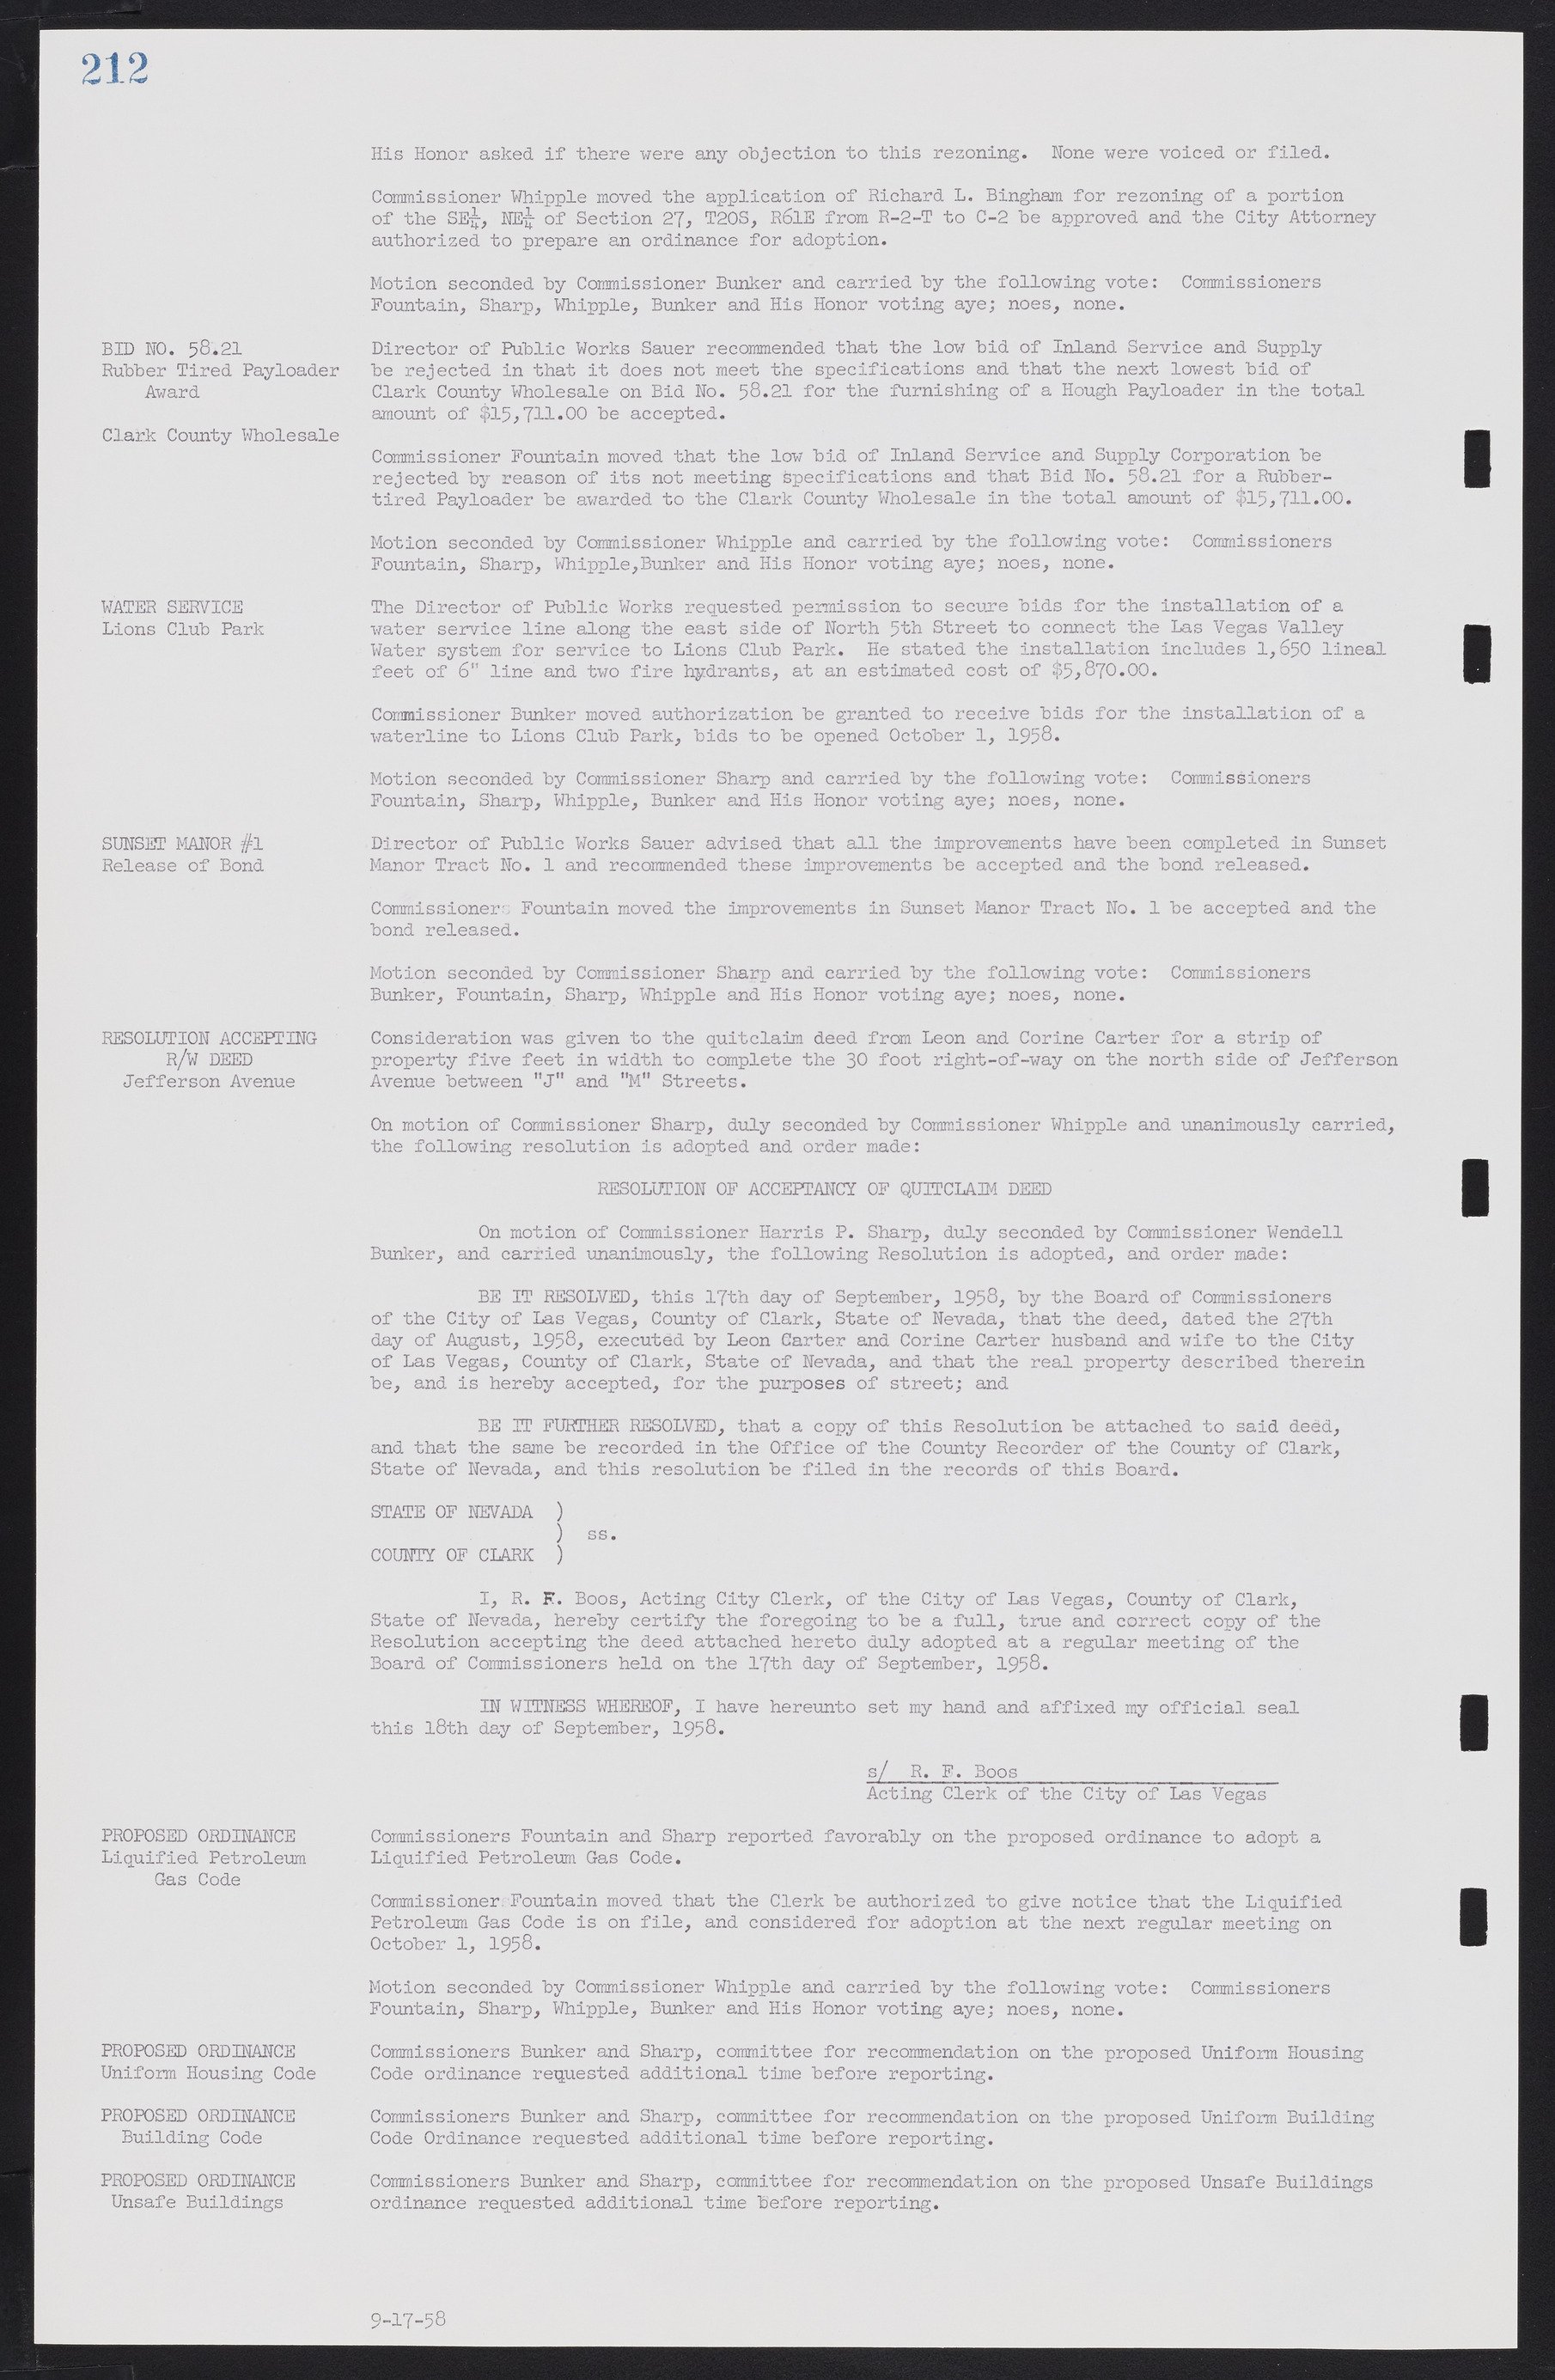 Las Vegas City Commission Minutes, November 20, 1957 to December 2, 1959, lvc000011-216